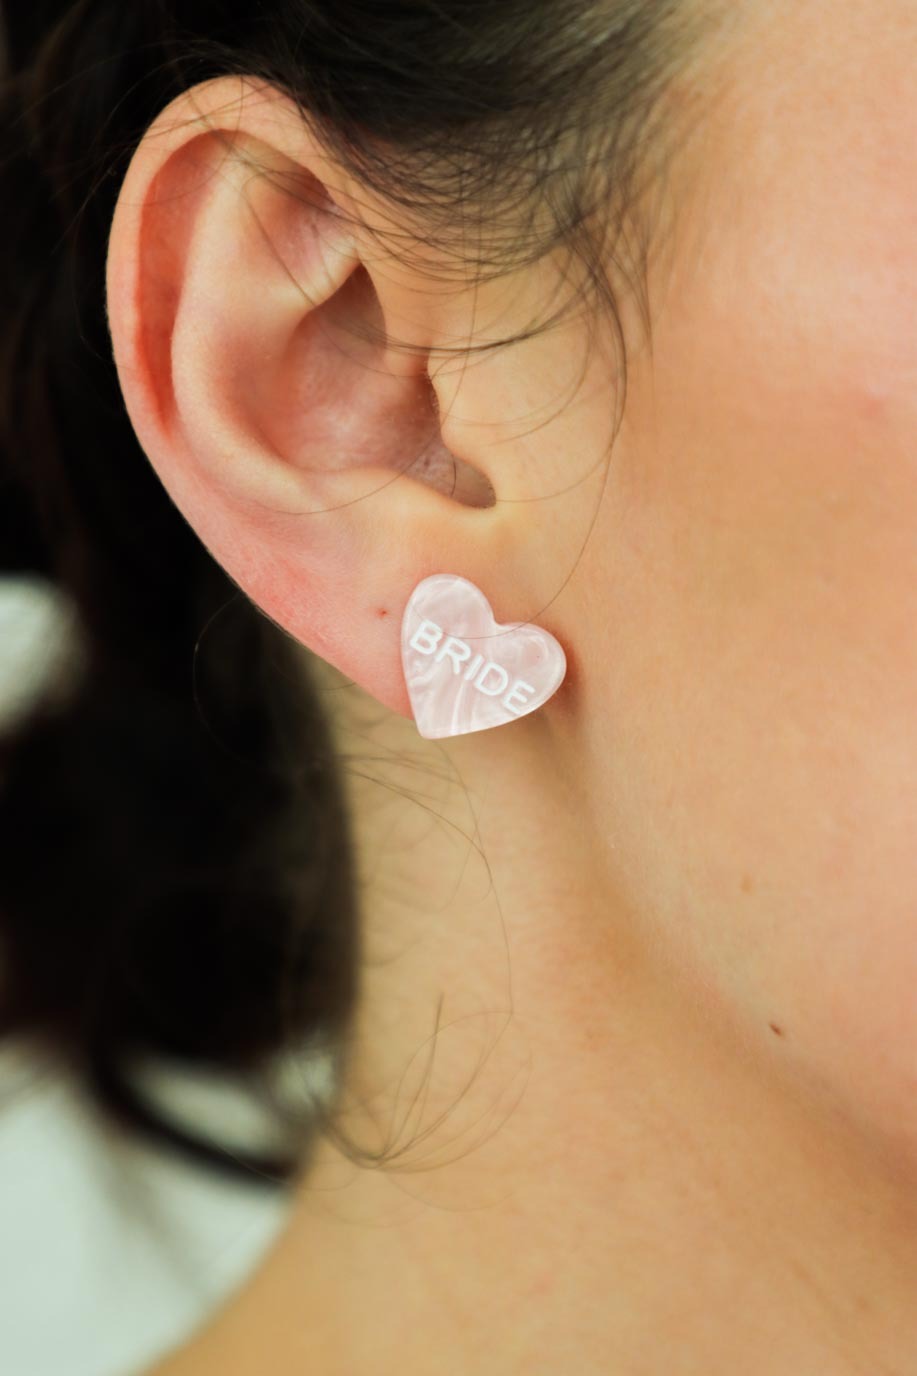 girl wearing pink stud heart earrings with "bride" letters